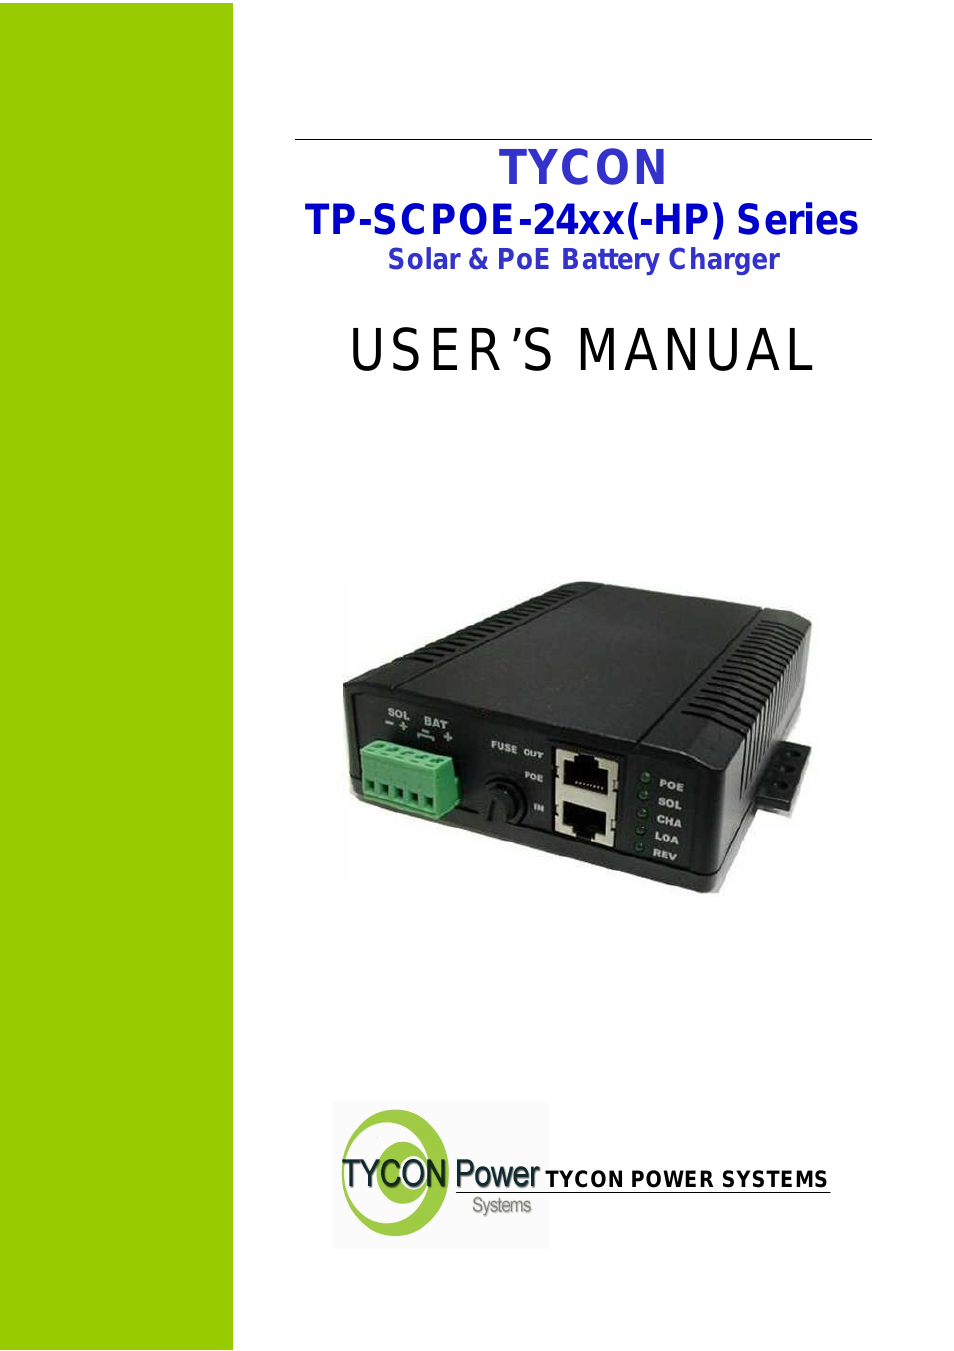 TP-SCPOE-24xx-HP Series